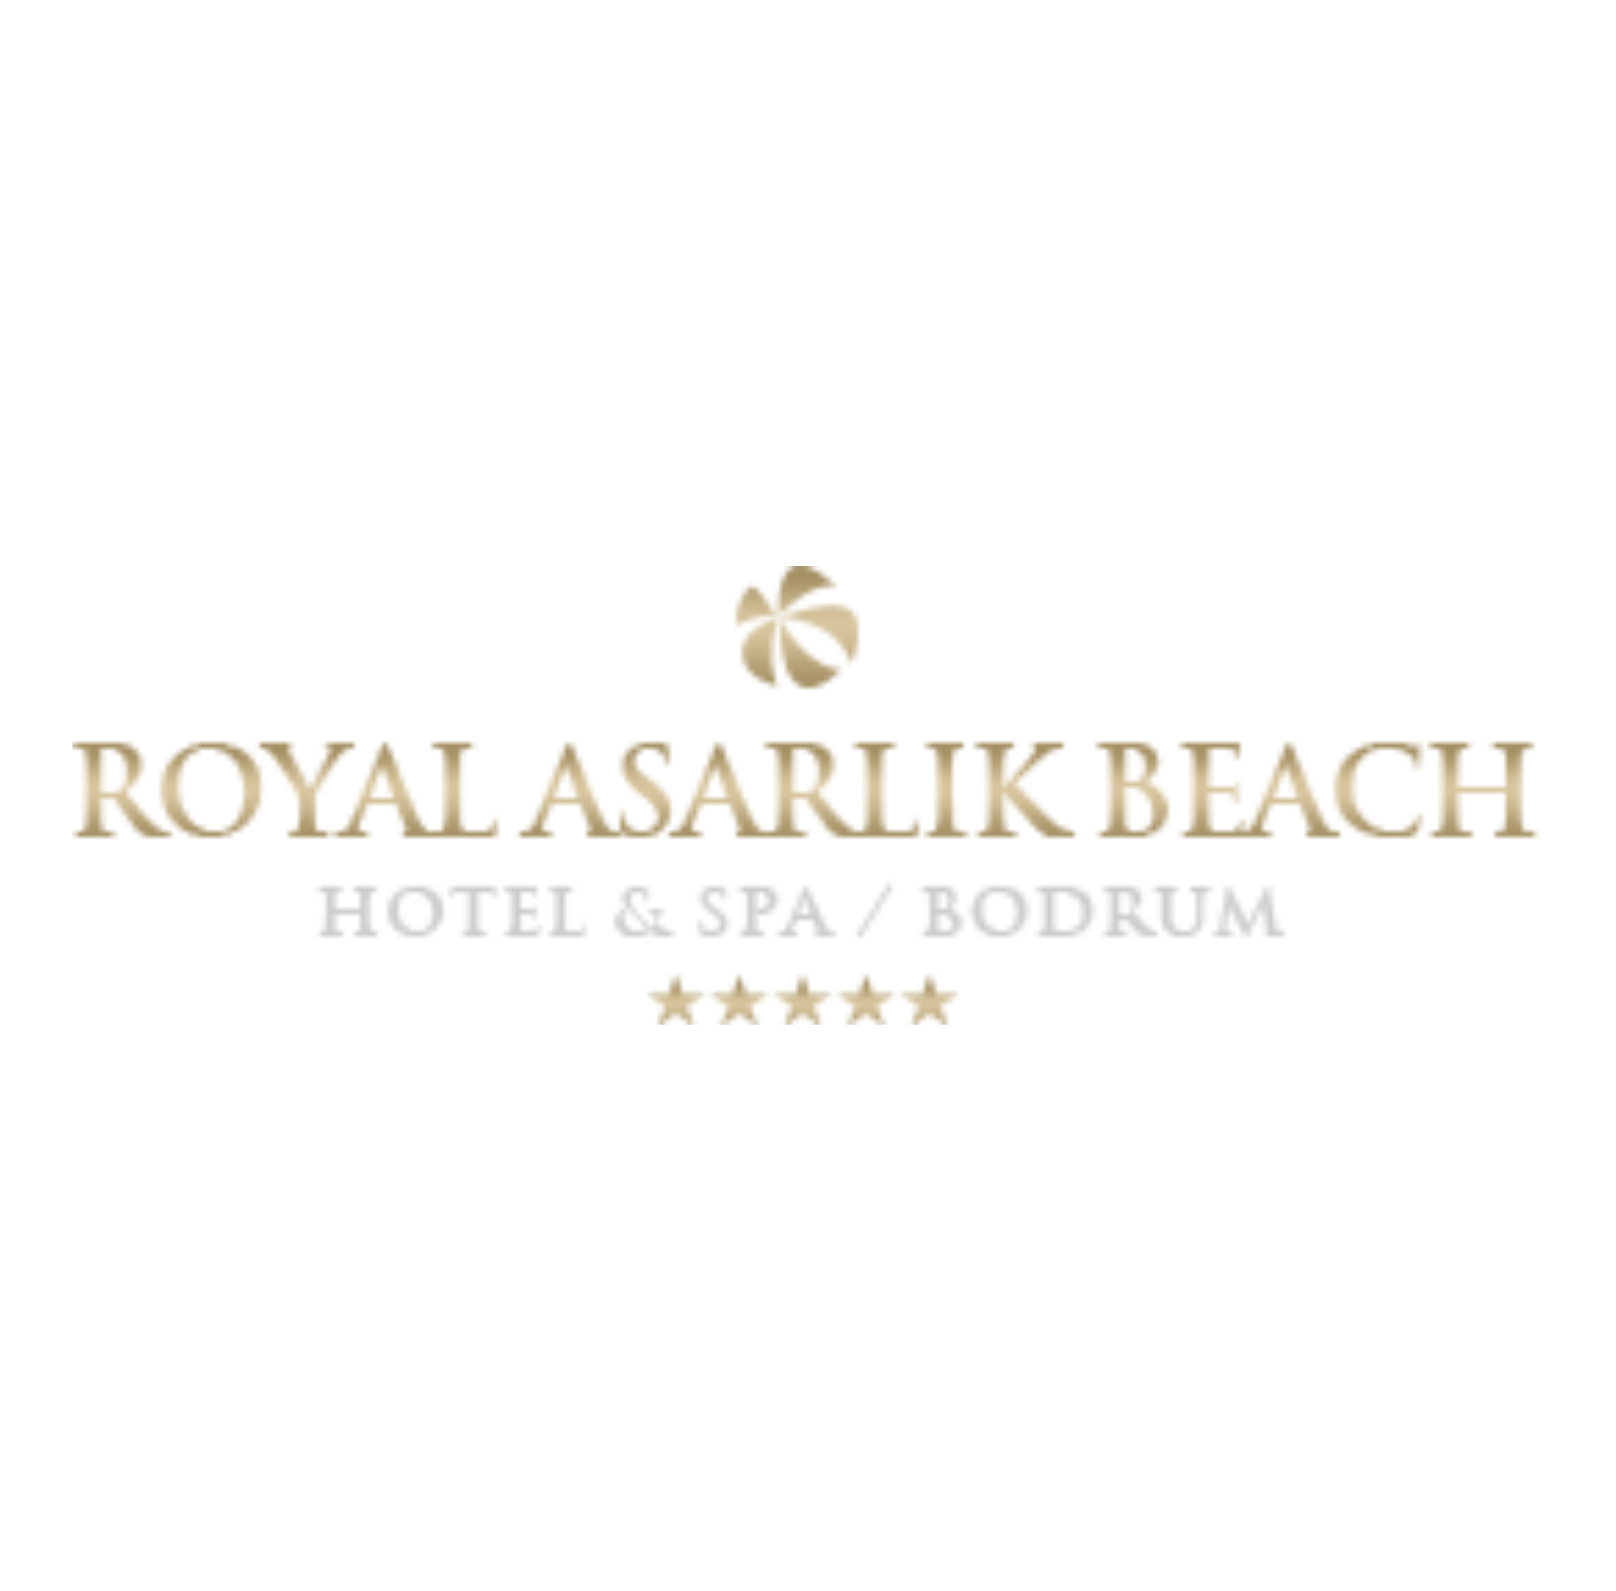 ROYAL ASARLIK BEACH HOTEL&SPA